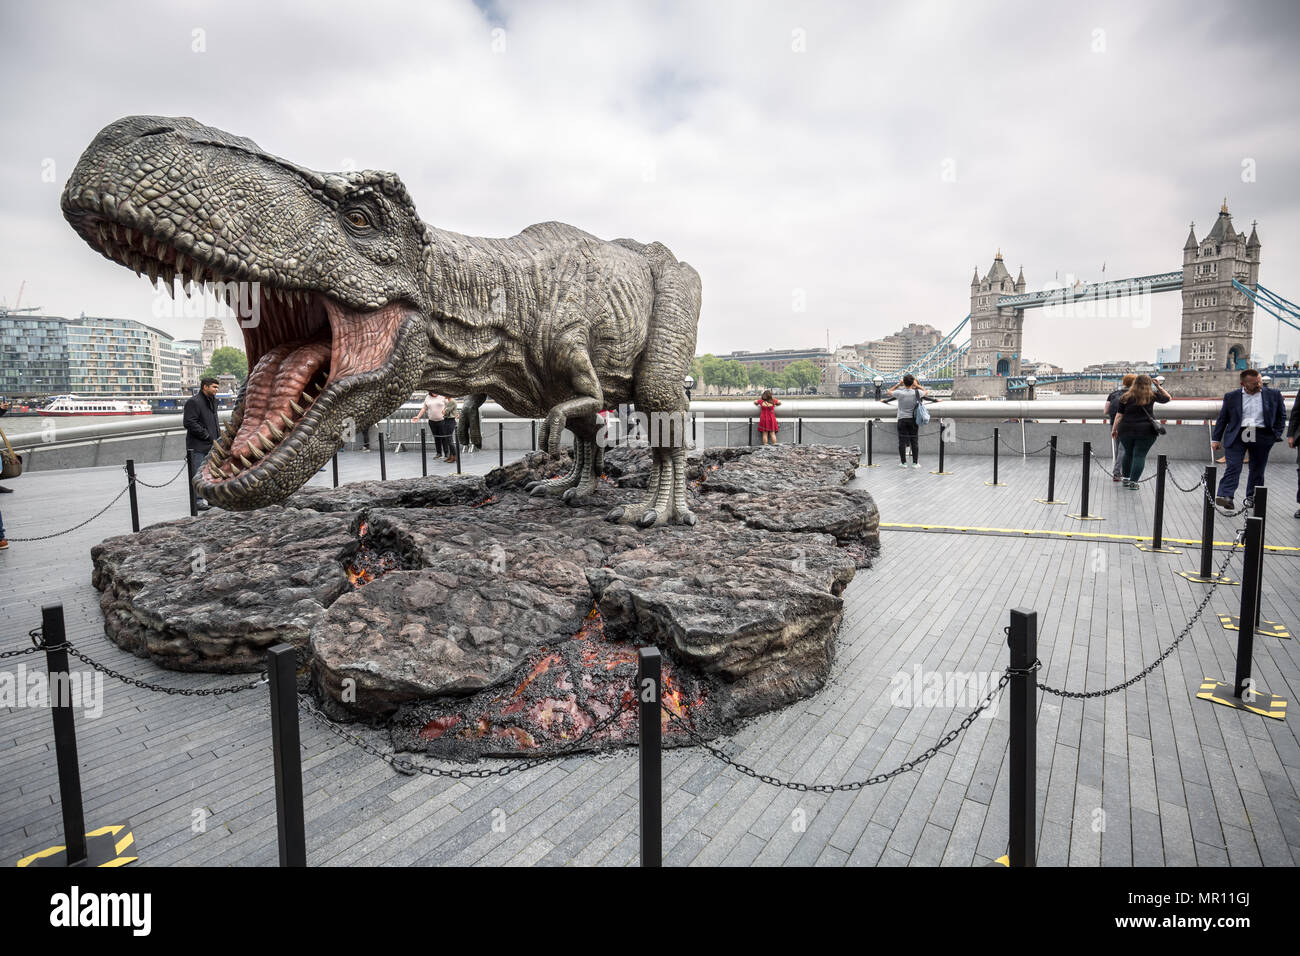 London, UK. 25th May 2018. A model Tyrannosaurus Rex at London Bridge promotes 'Jurassic World: Fallen Kingdom' film opening. Credit: Guy Corbishley/Alamy Live News Stock Photo